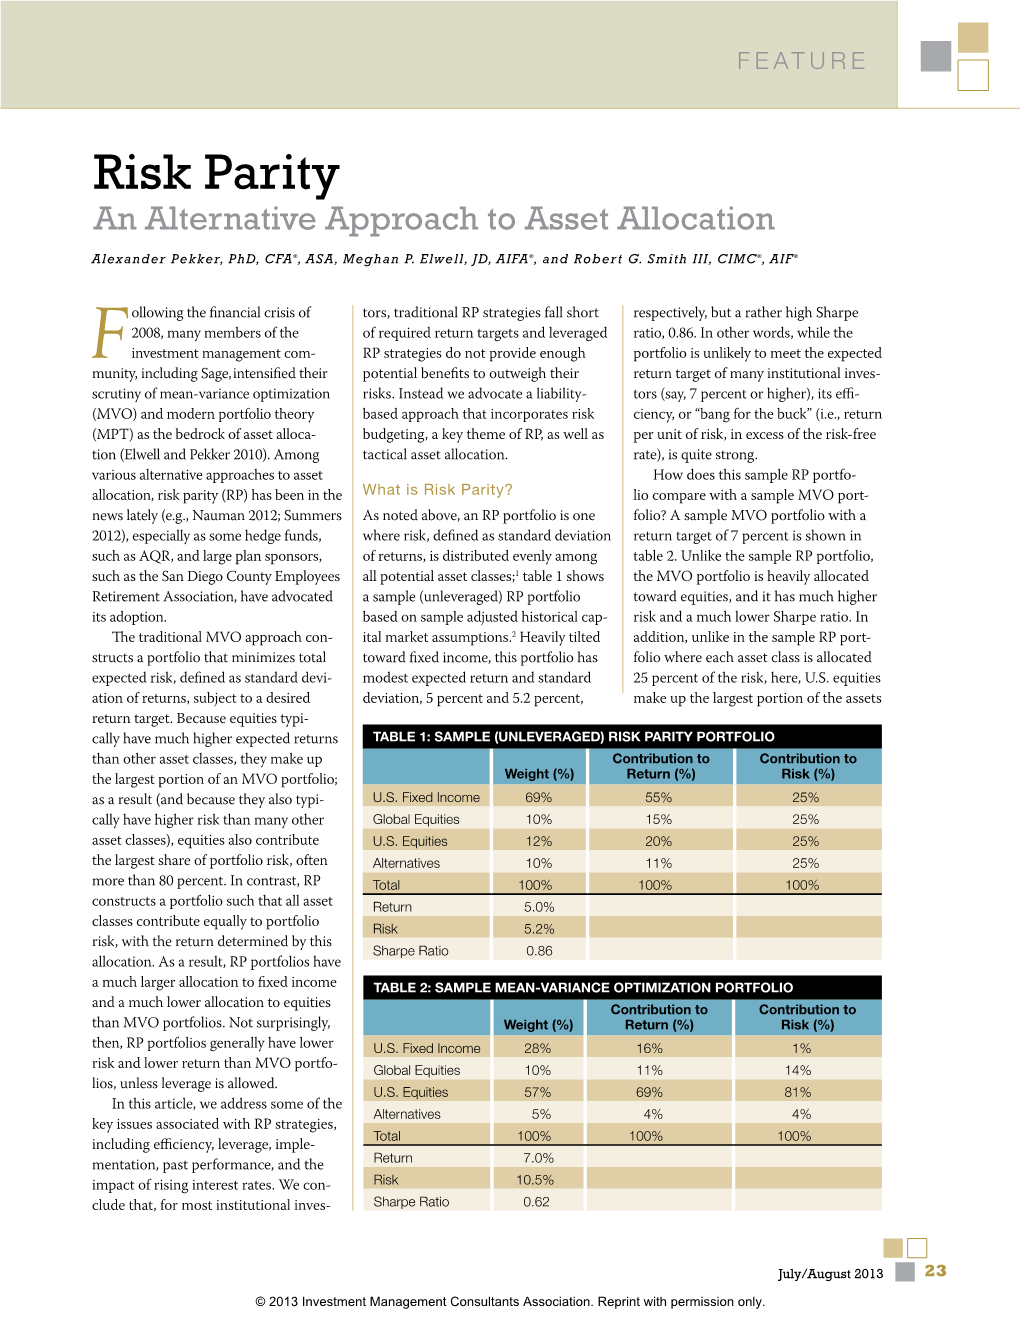 Risk Parity an Alternative Approach to Asset Allocation